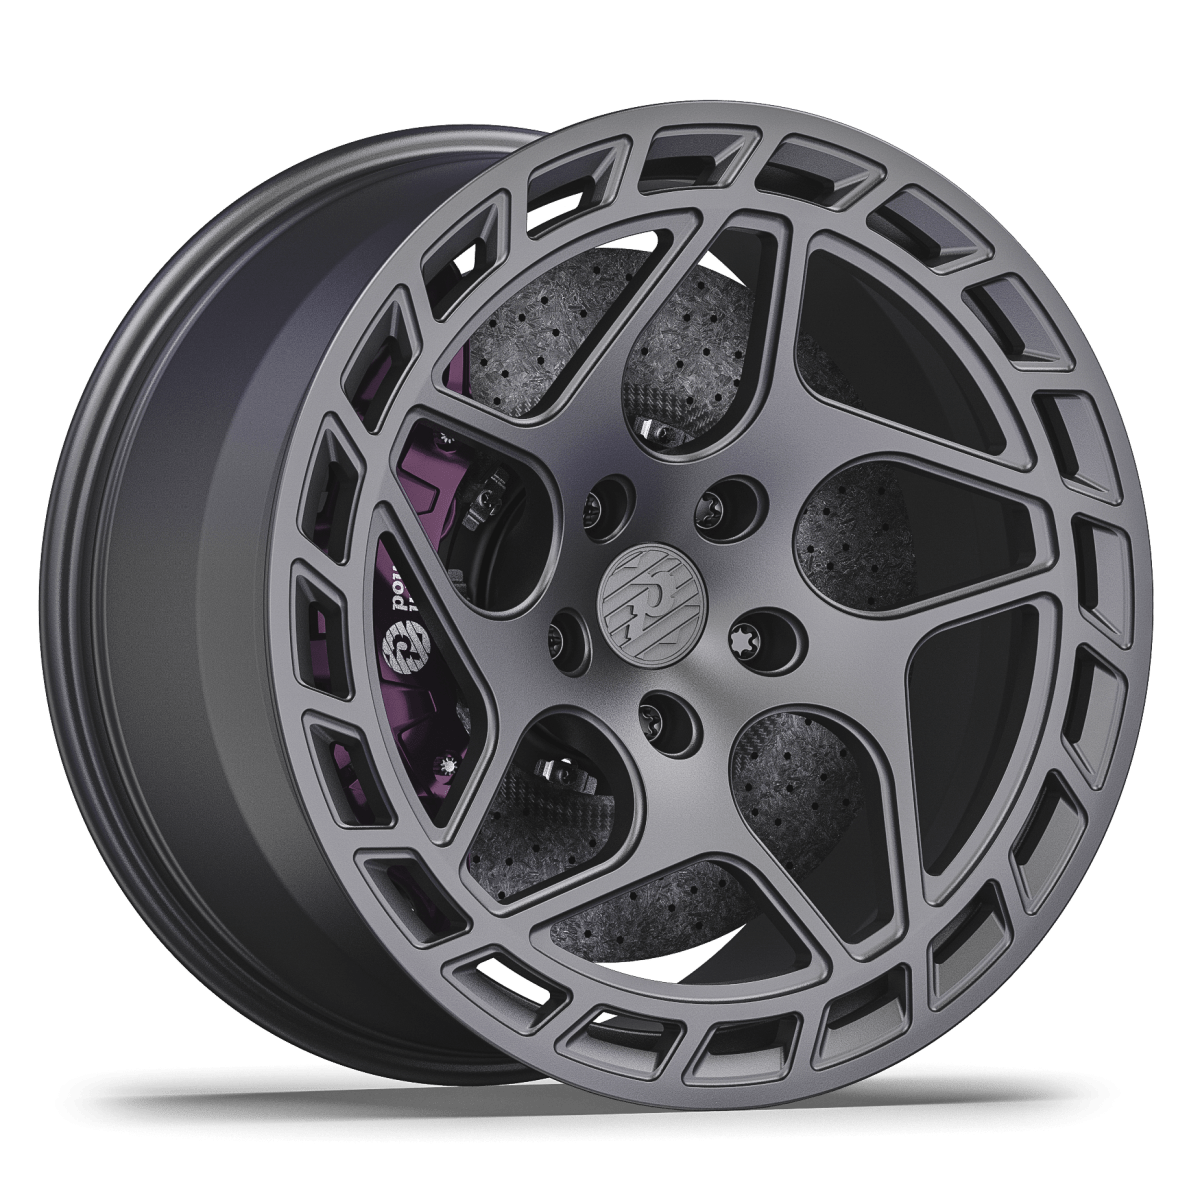 Пауэр диски. Диски Motorsport Racing Wheel BB-57. Power Wheels ms024 диски. Диски Power Wheels Urus r22. ABT Motorsport диски.